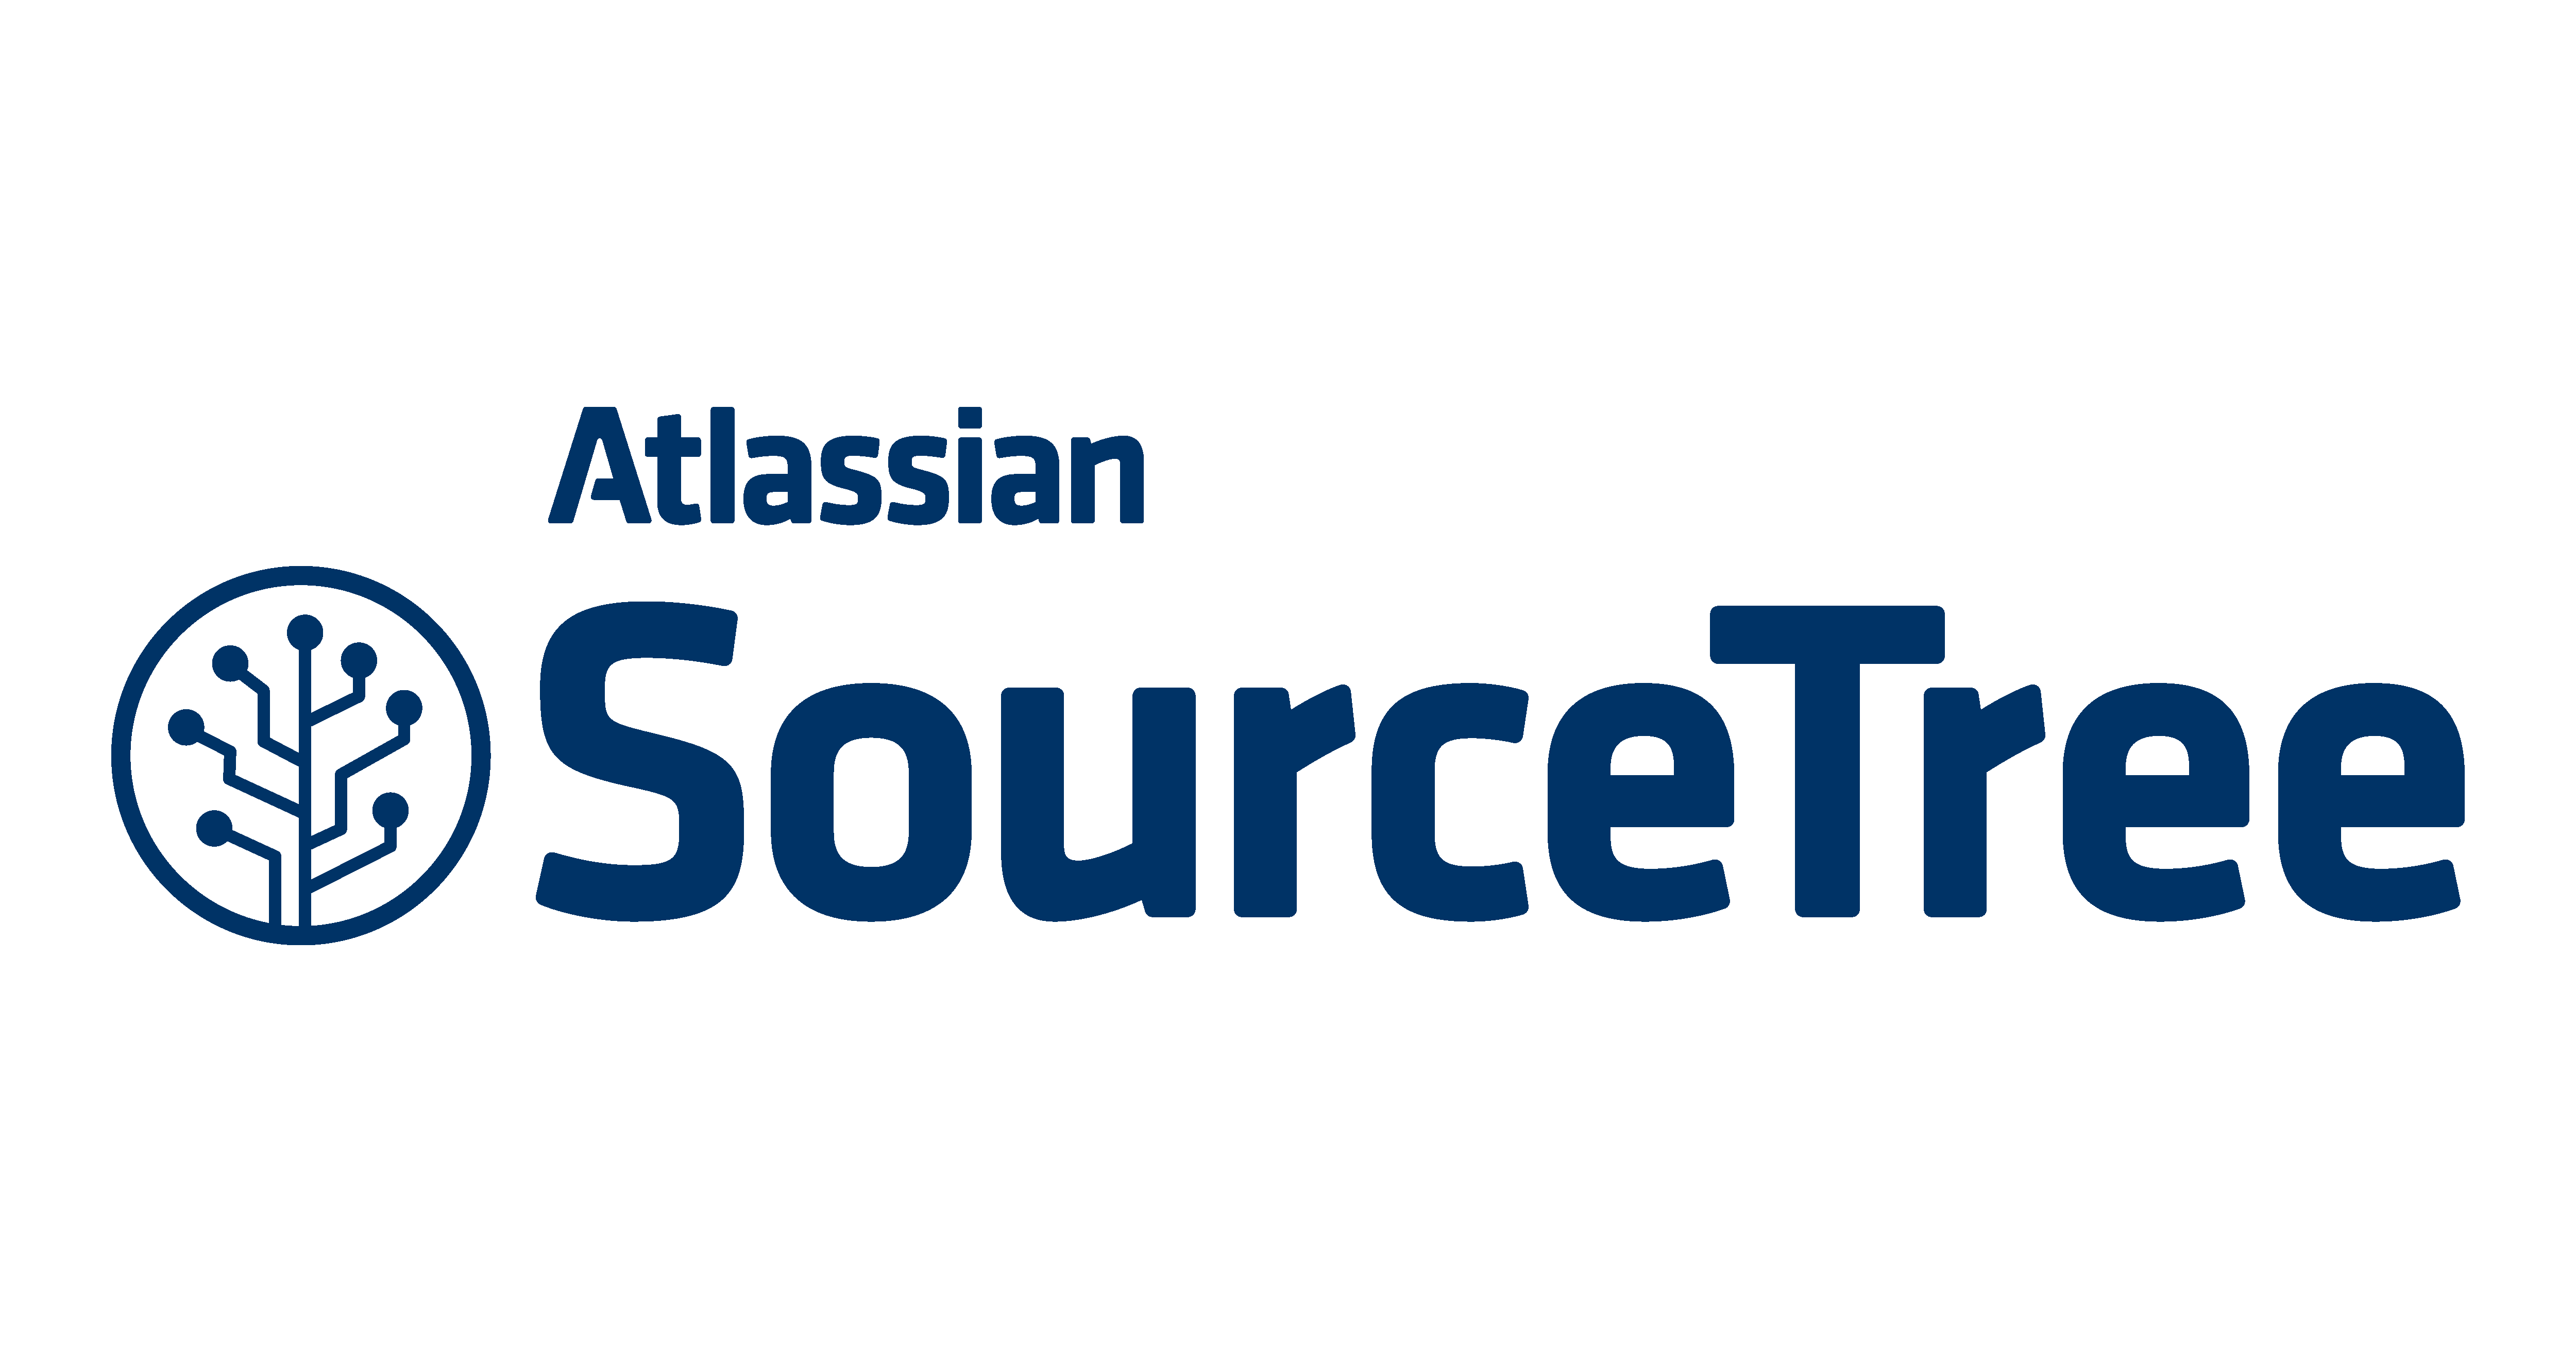 Sourcetree Atlassian Download